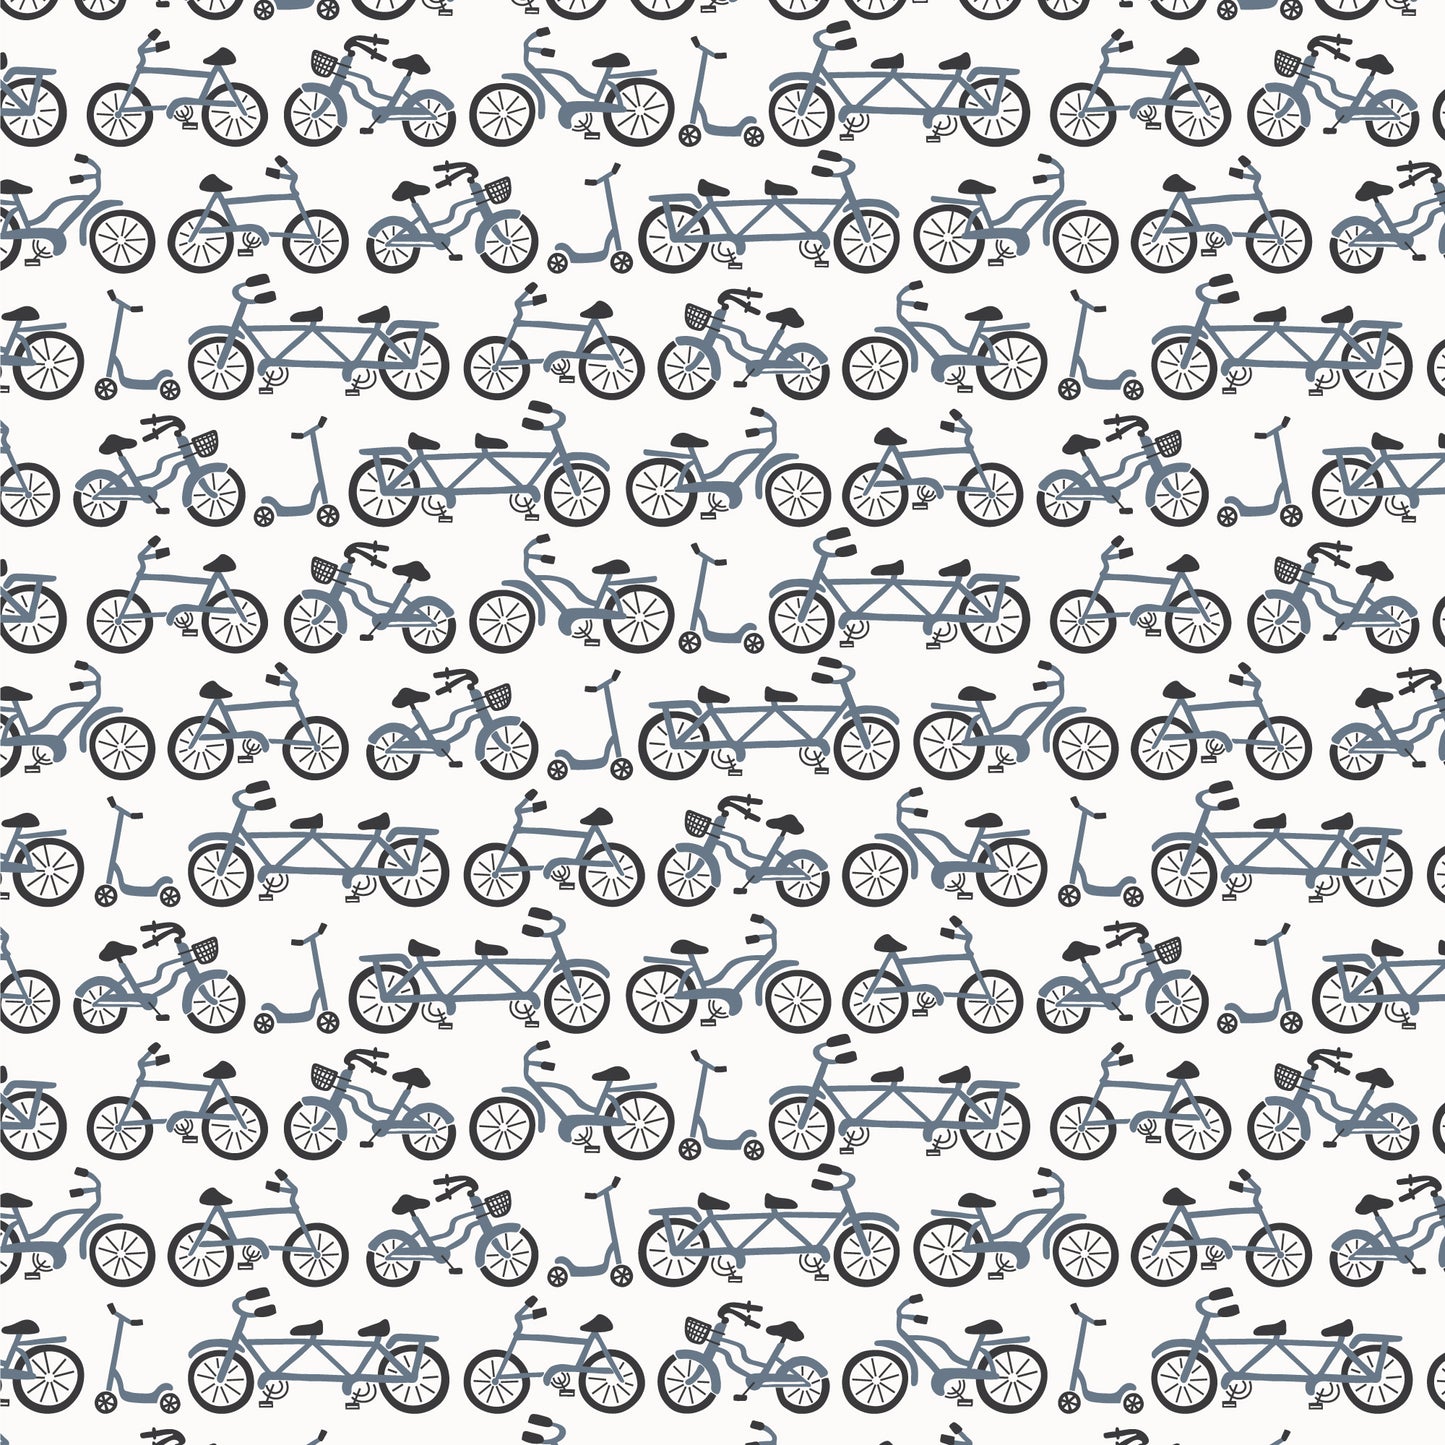 Short-Sleeve Snapsuit - Bikes Slate Blue